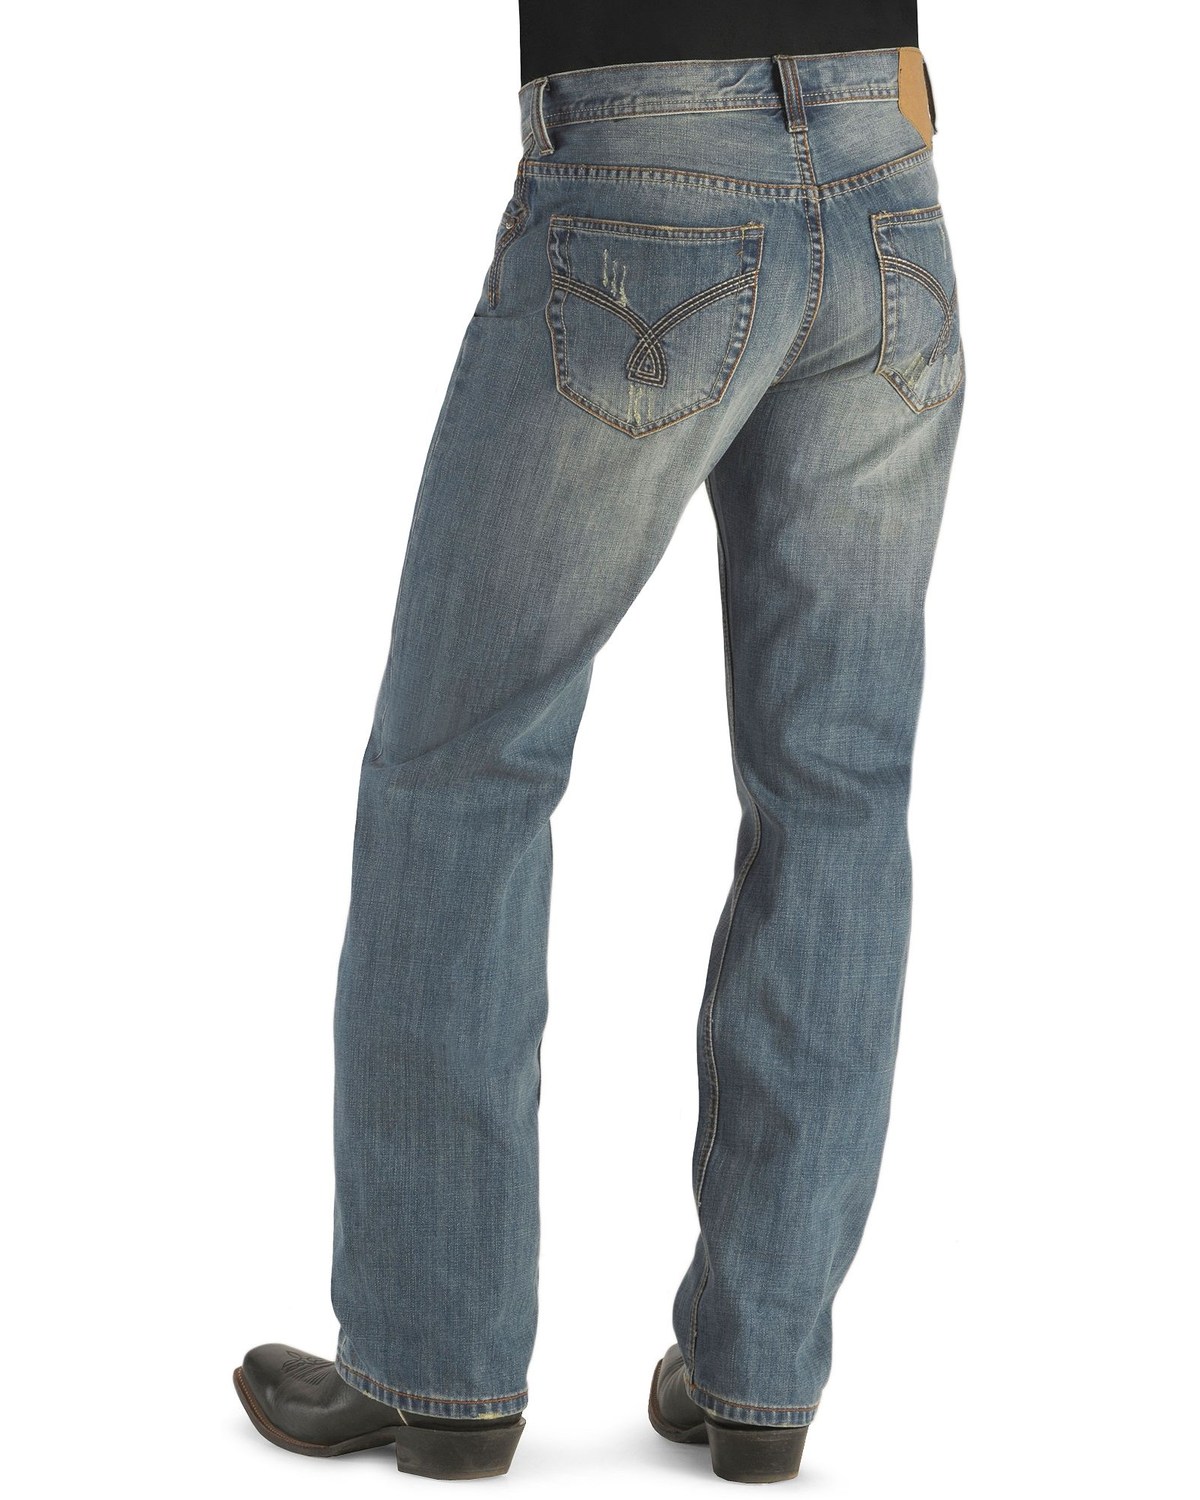 Tin Haul Regular Joe Heavy Distressed Jeans